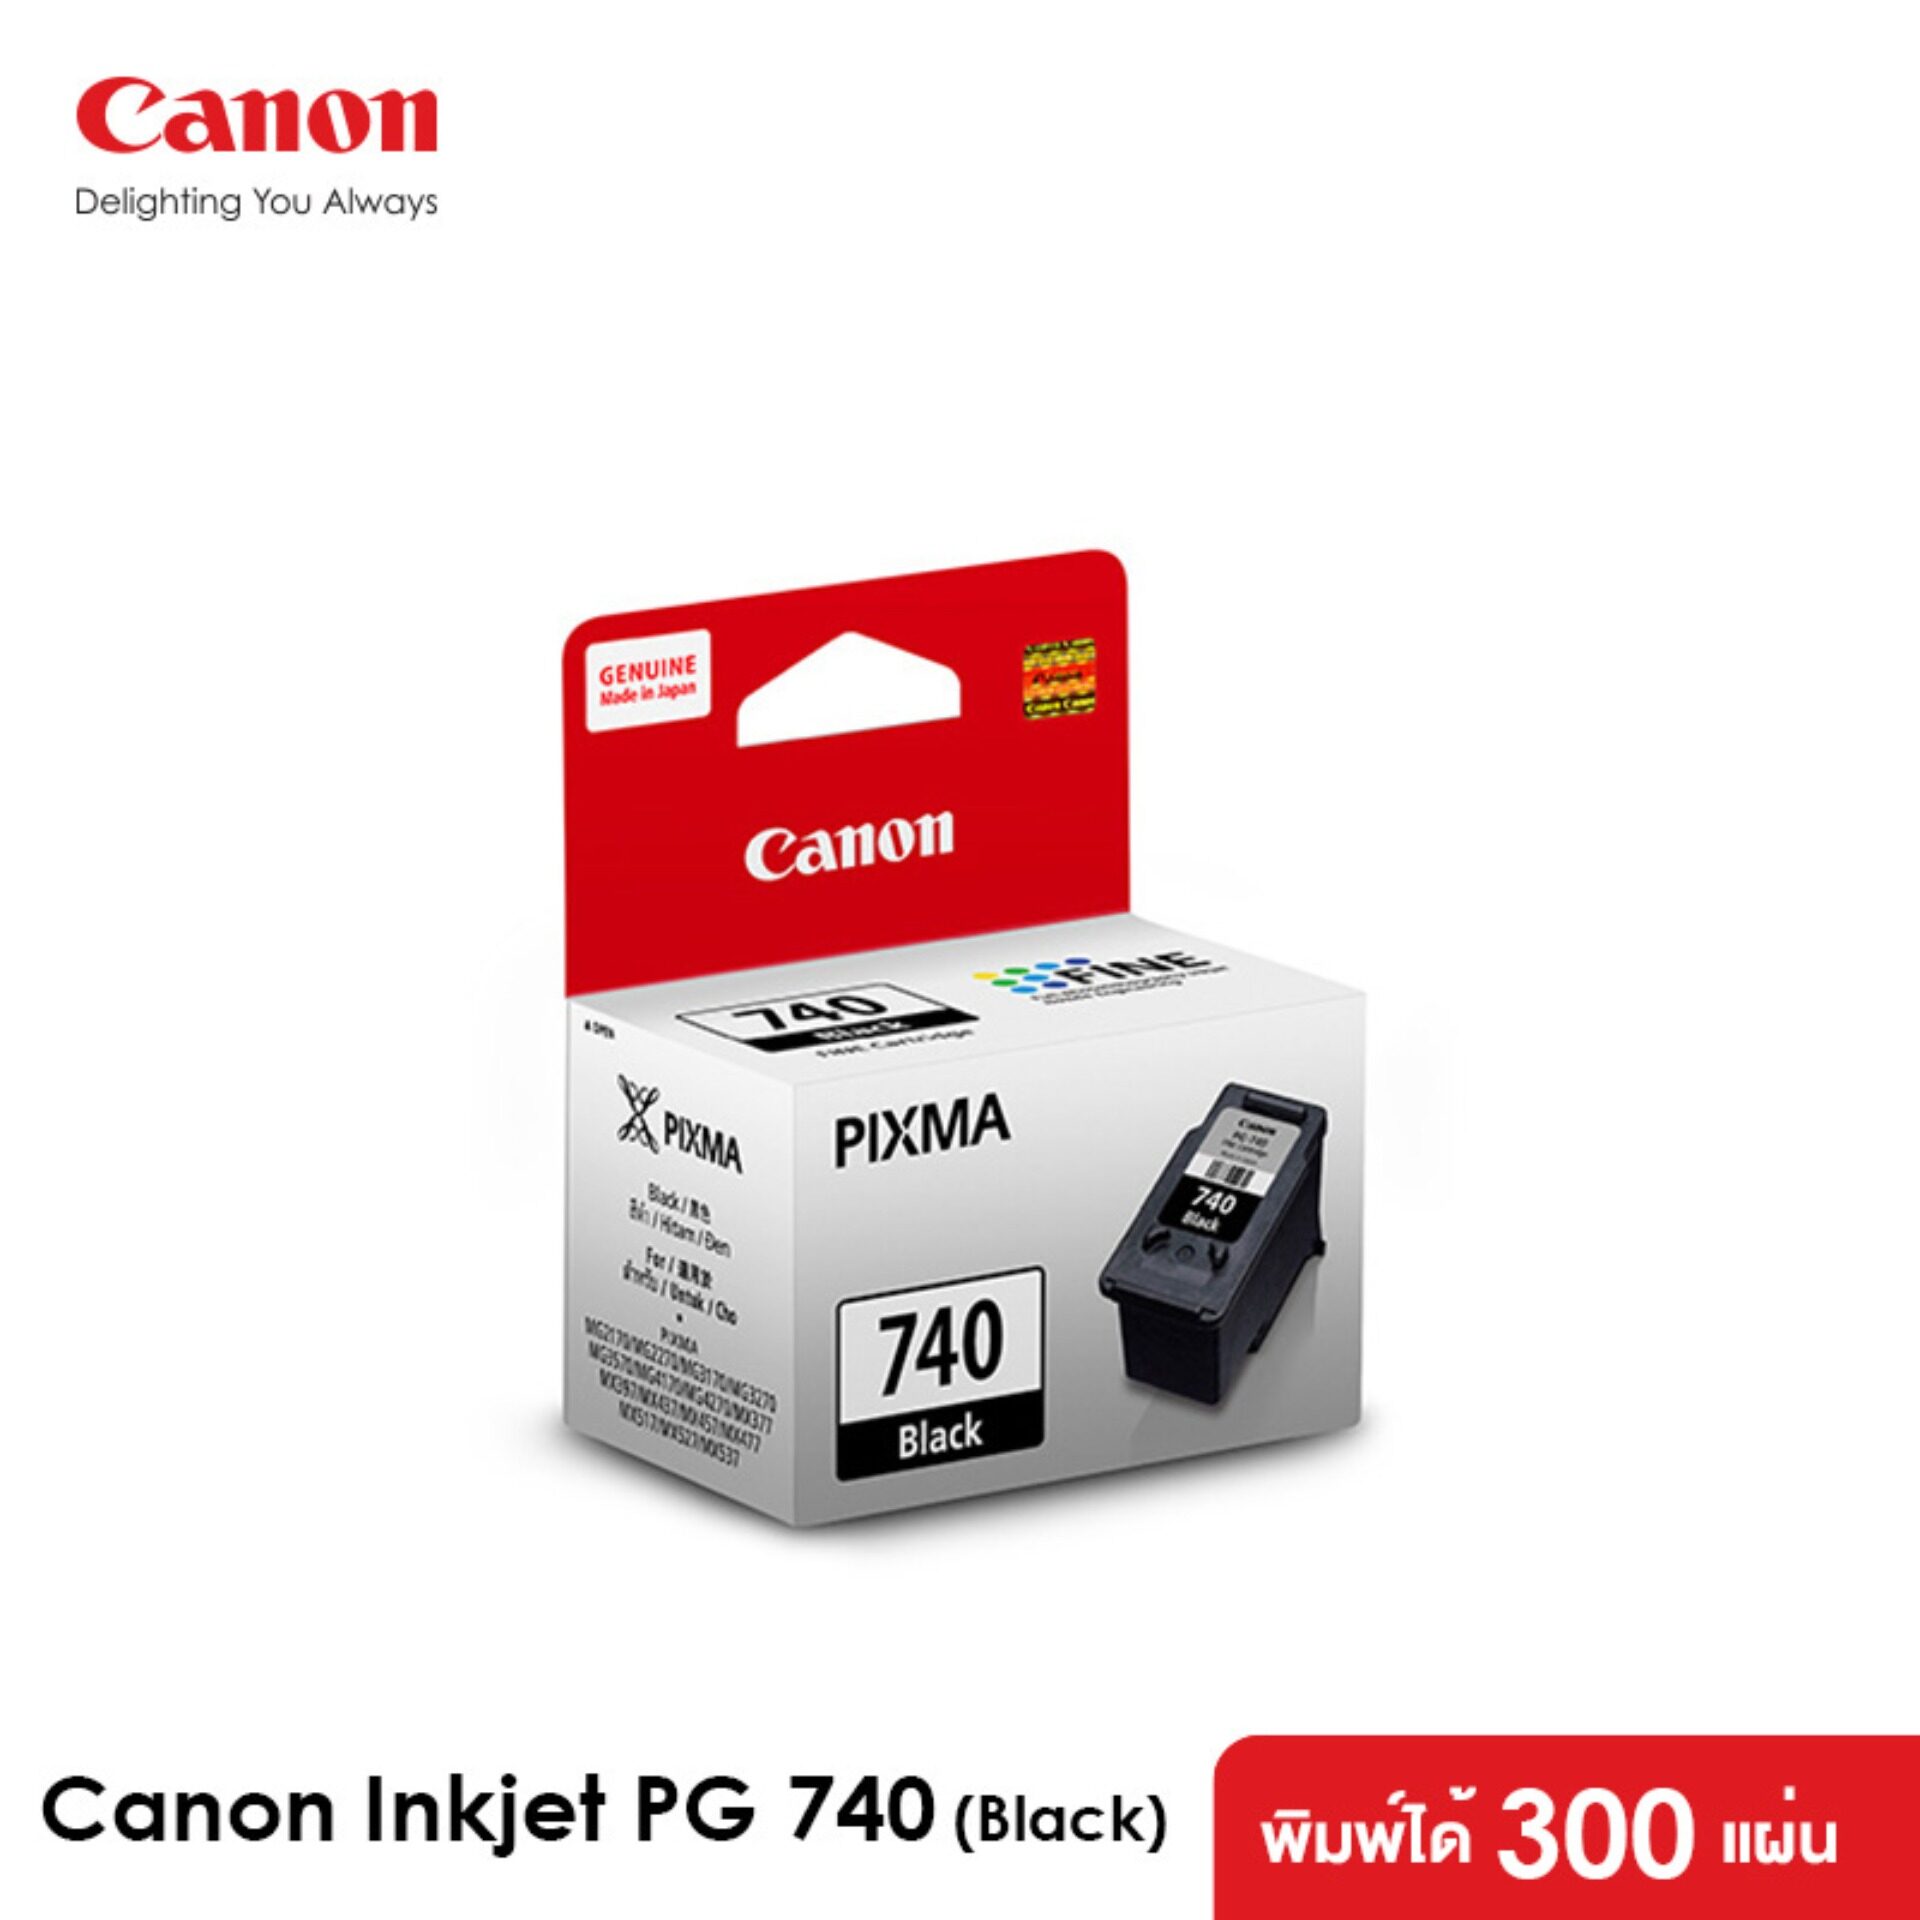 Canon ตลับหมึกอิงค์เจ็ท รุ่น PG 740 BK Black,CL 741 CL Color (หมึกแท้100%)